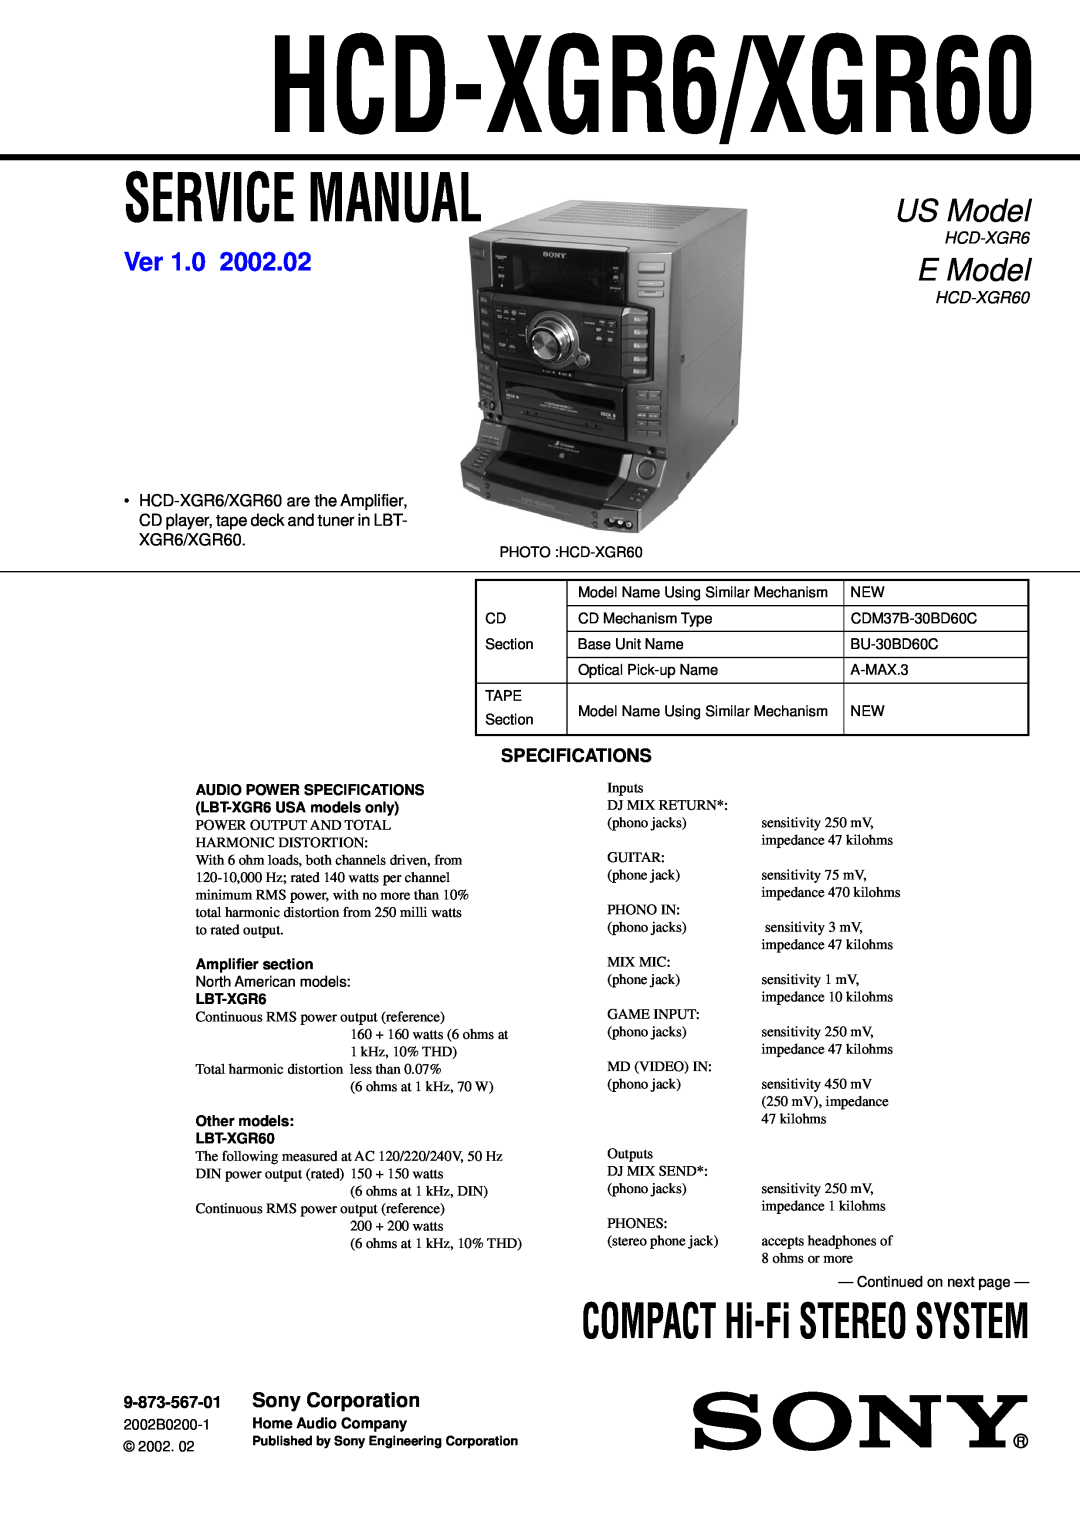 Sony HCD-XGR60 specifications Specifications, HCD-XGR6/XGR60, Service Manual, US Model, E Model, Ver 1.0, Sony Corporation 